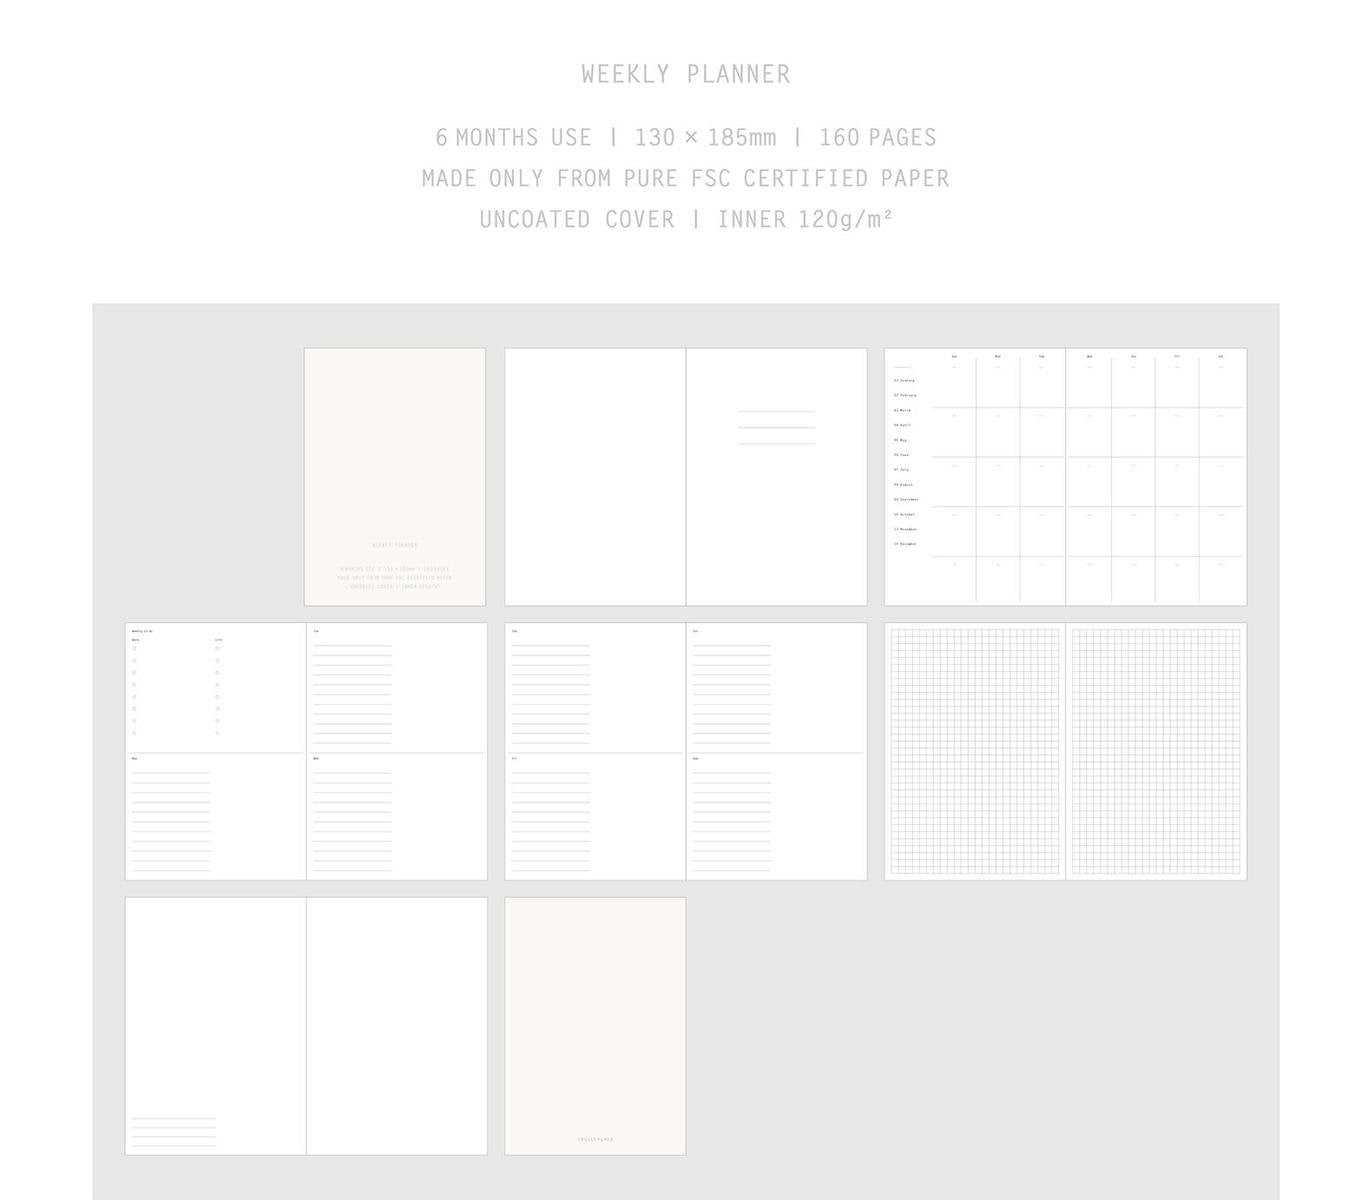 Free Planner Semanal | Planificador sin fecha | Essential Note Weekly Planner - Weekly Planner B6 (13 x 18.5cm) | Trolls Paper